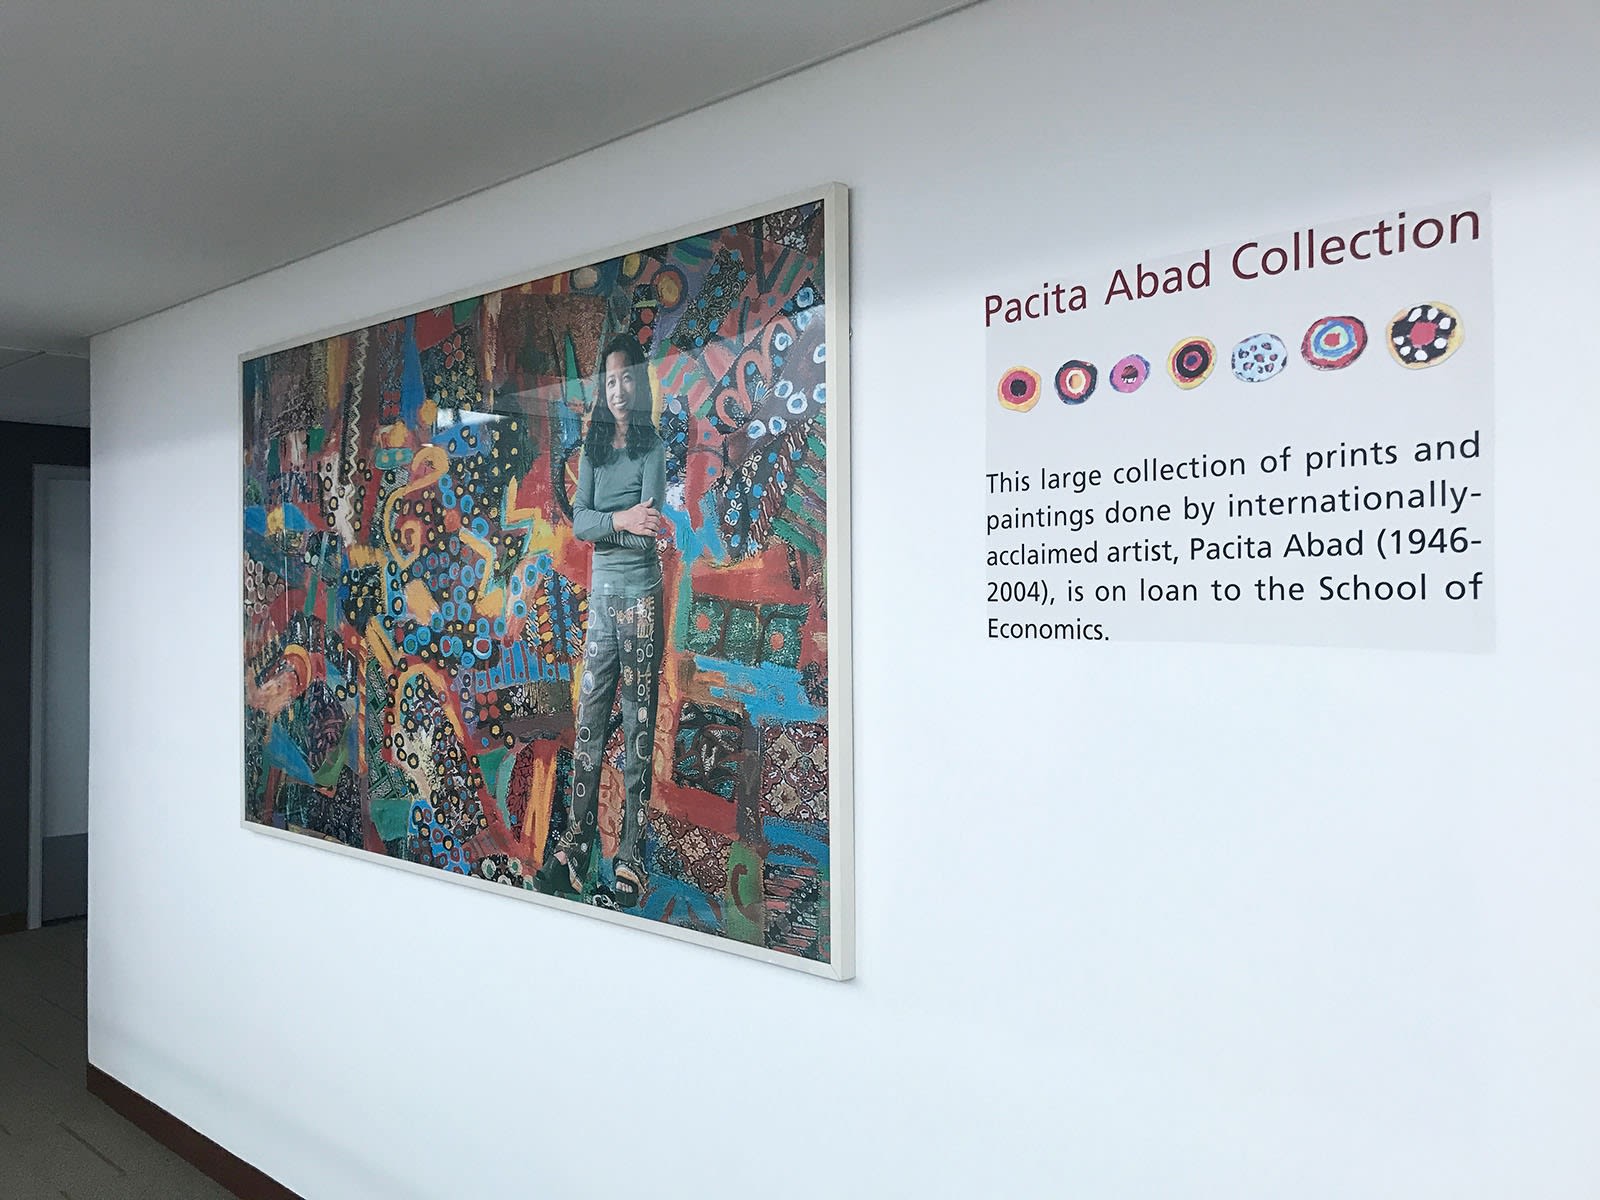 Pacita Abad Gallery at Singapore Management University